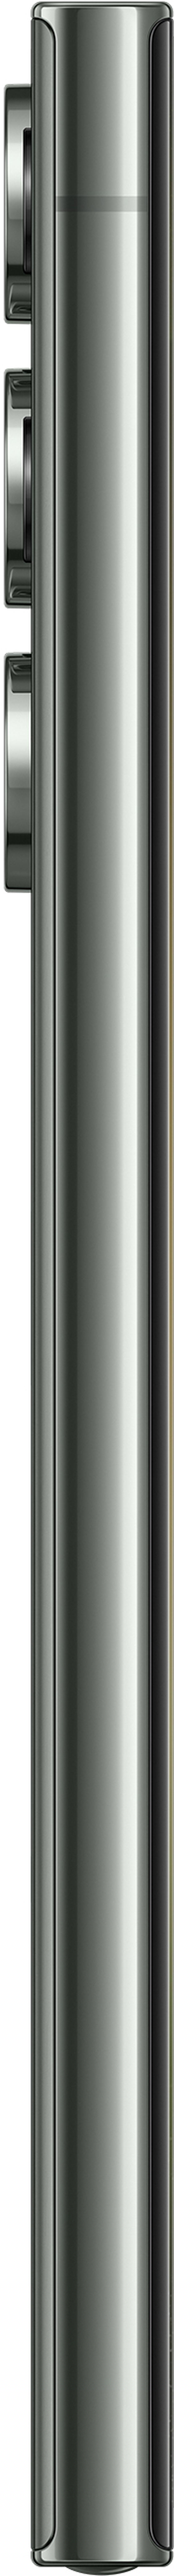 Samsung Galaxy S23 Ultra 256GB Dobbelt-SIM Grønn